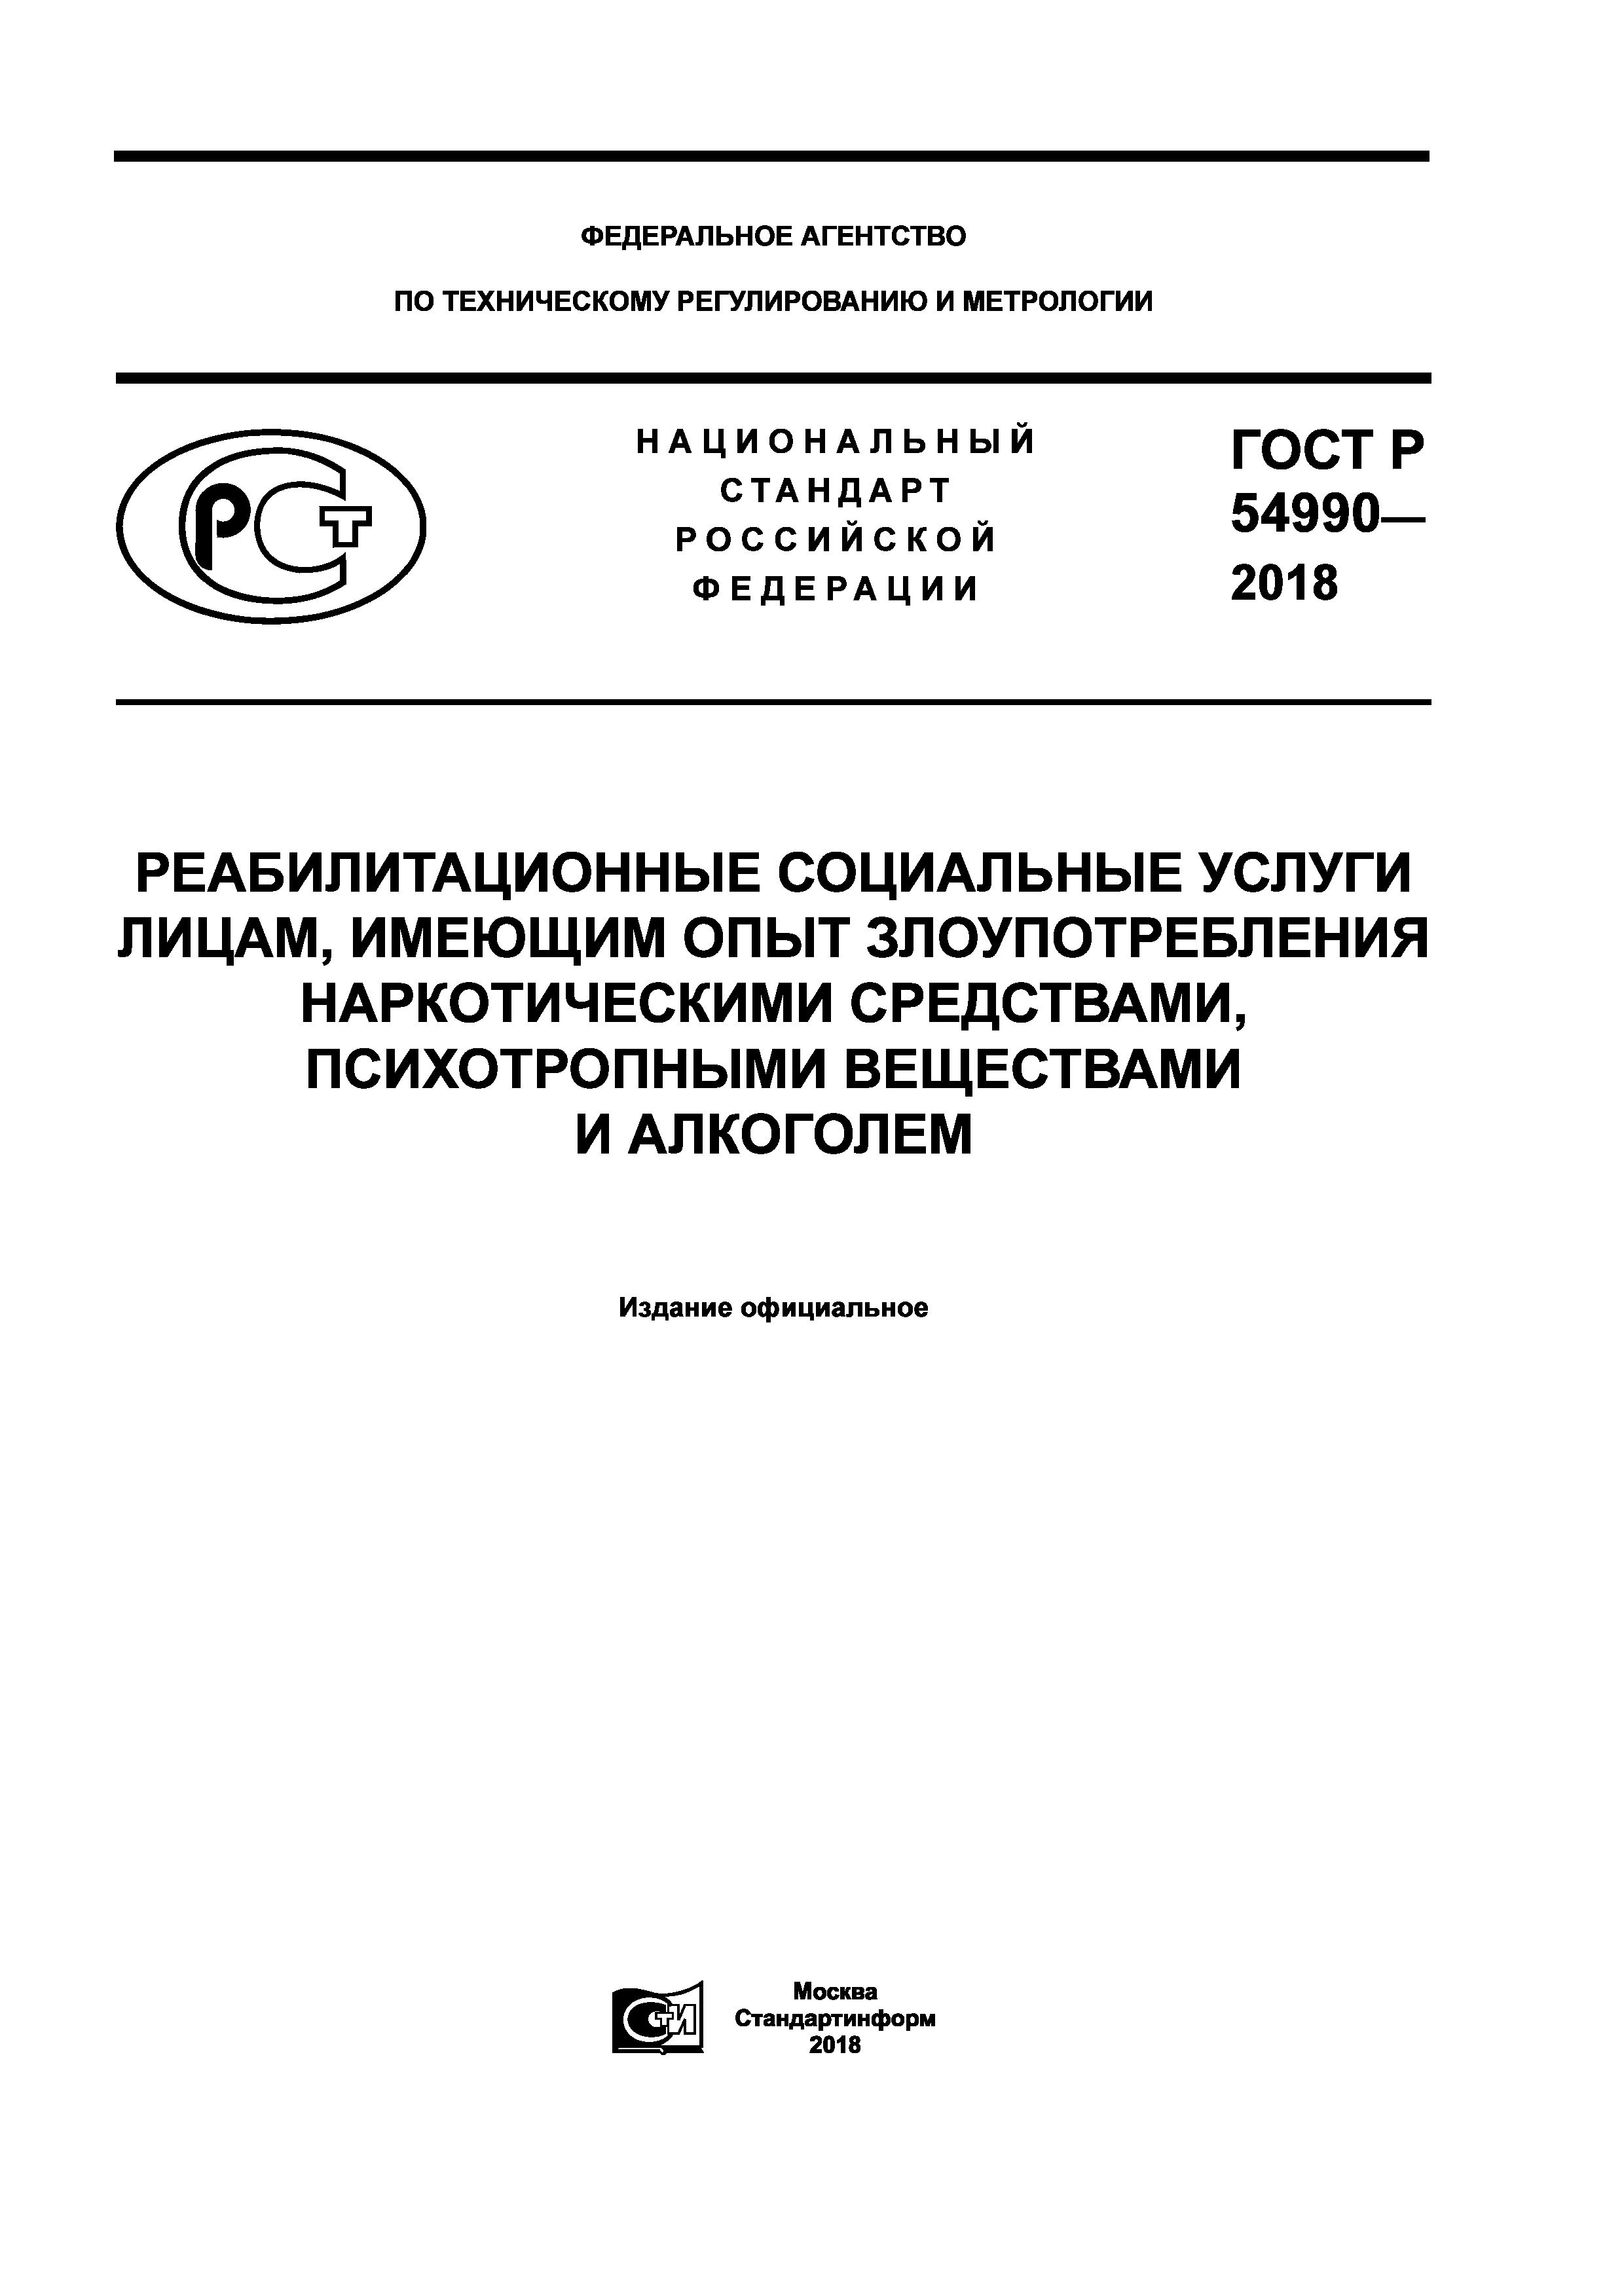 ГОСТ Р 54990-2018